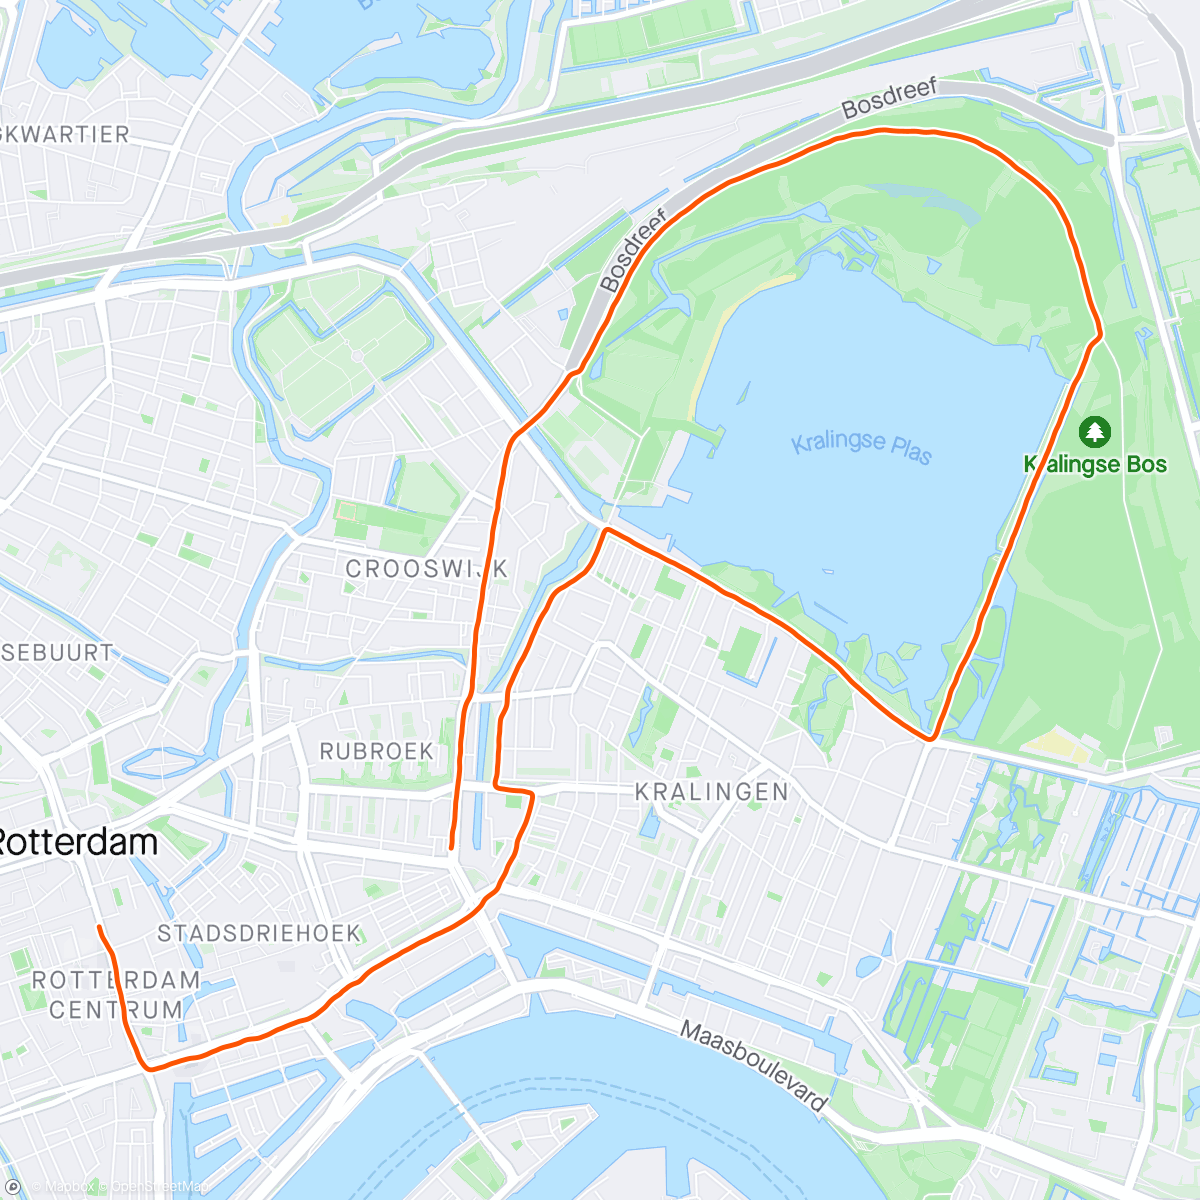 「1/4 marathon Rdam - kippenvel op de Coolsingel🔥🔥🔥 #demooiste」活動的地圖